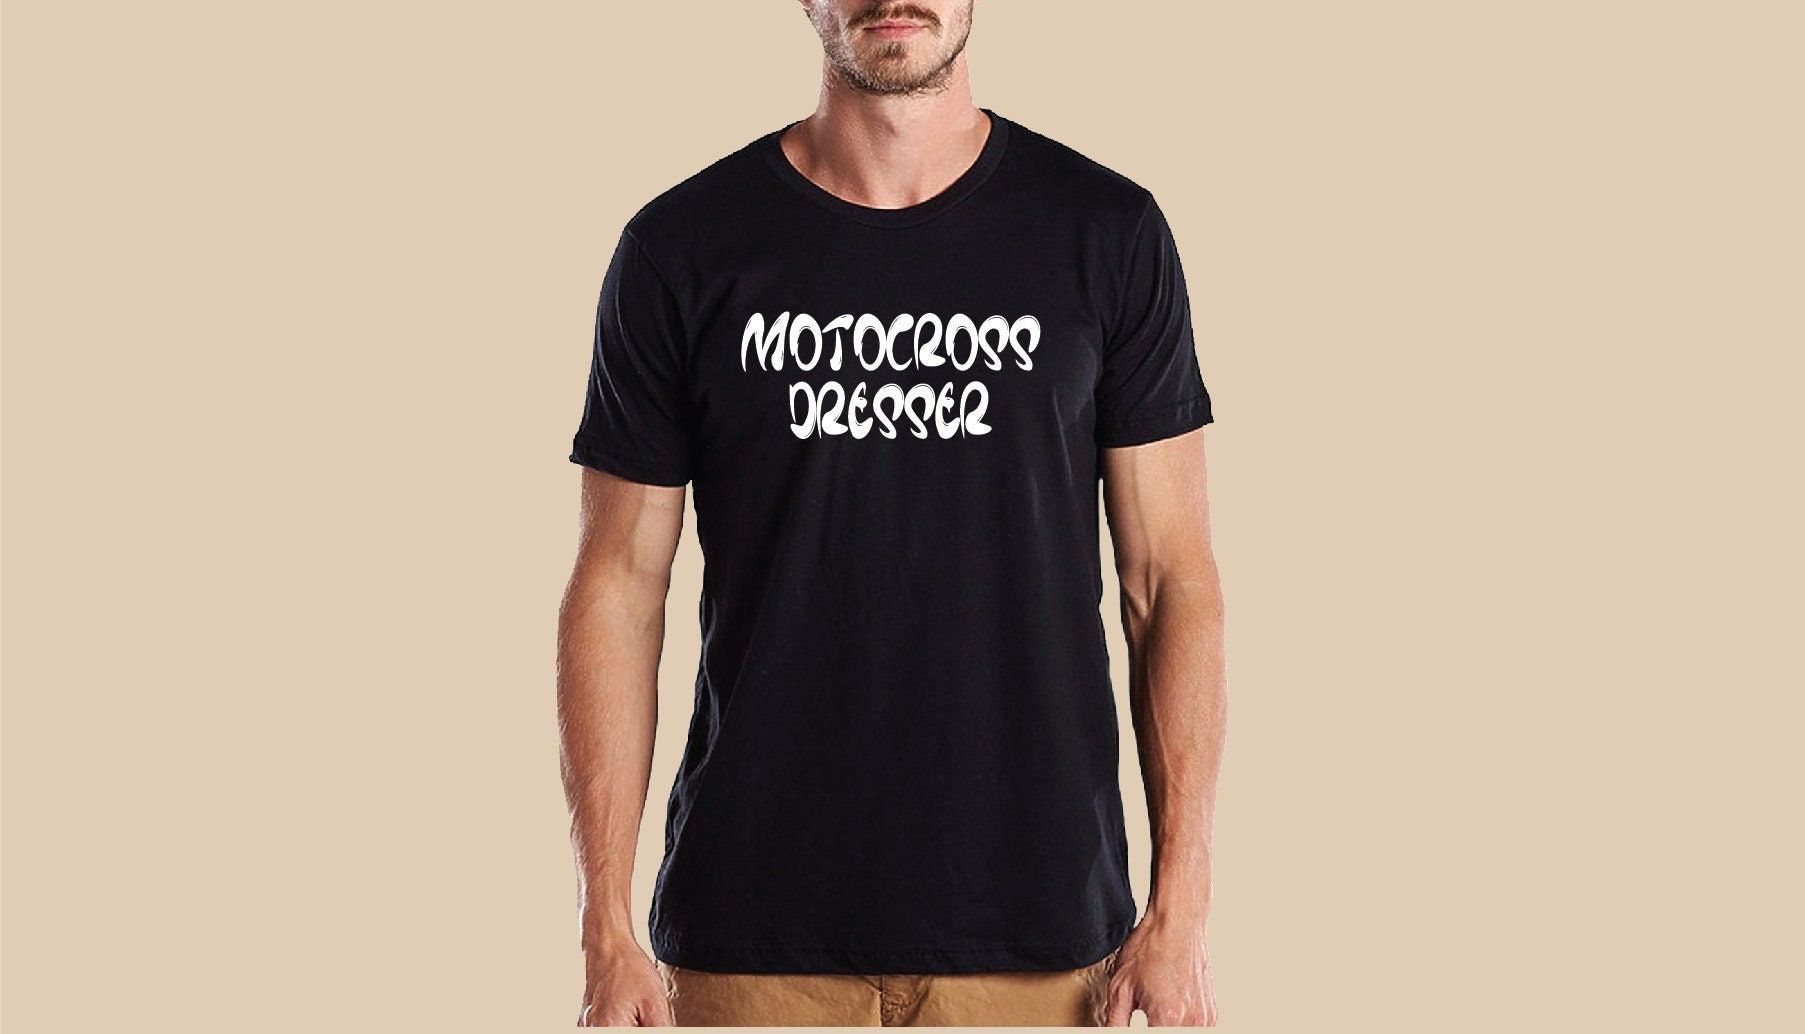 MOTOCROSS DRESSER – Funny Motocross Dirtbike  Motorcycle Rider Shirt